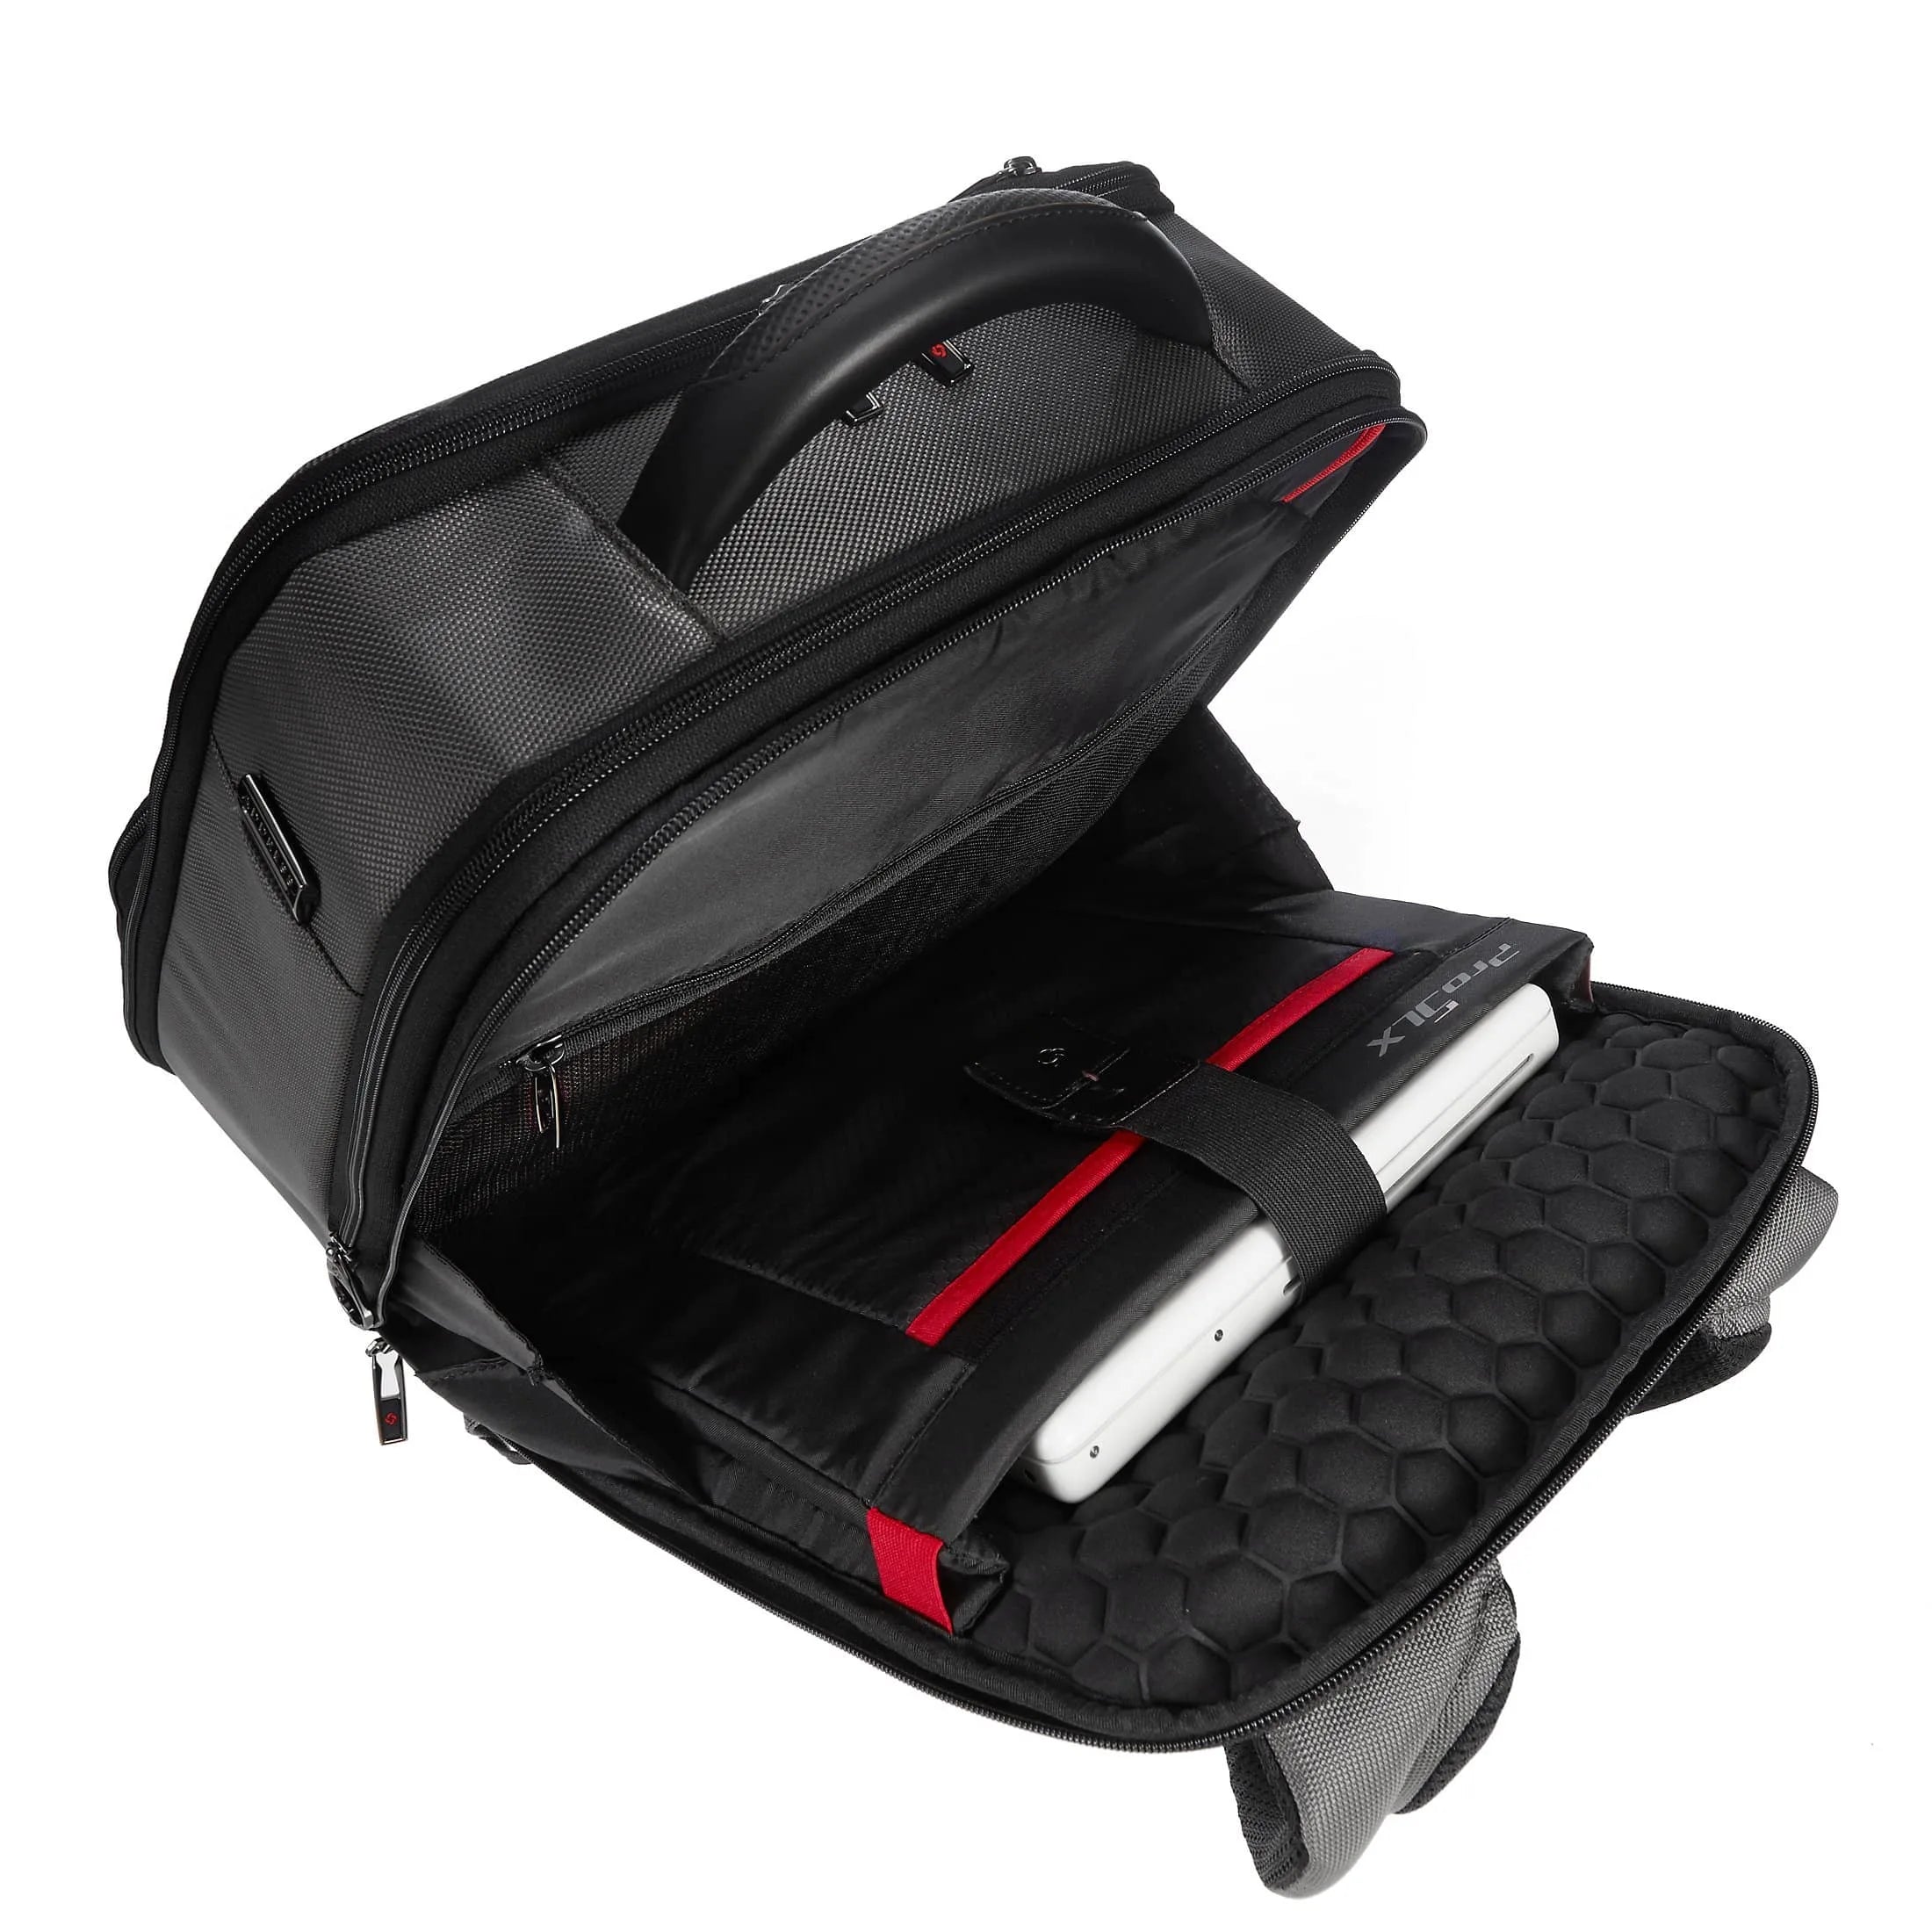 Samsonite Pro-DLX 5 Laptop Backpack 41 cm - black